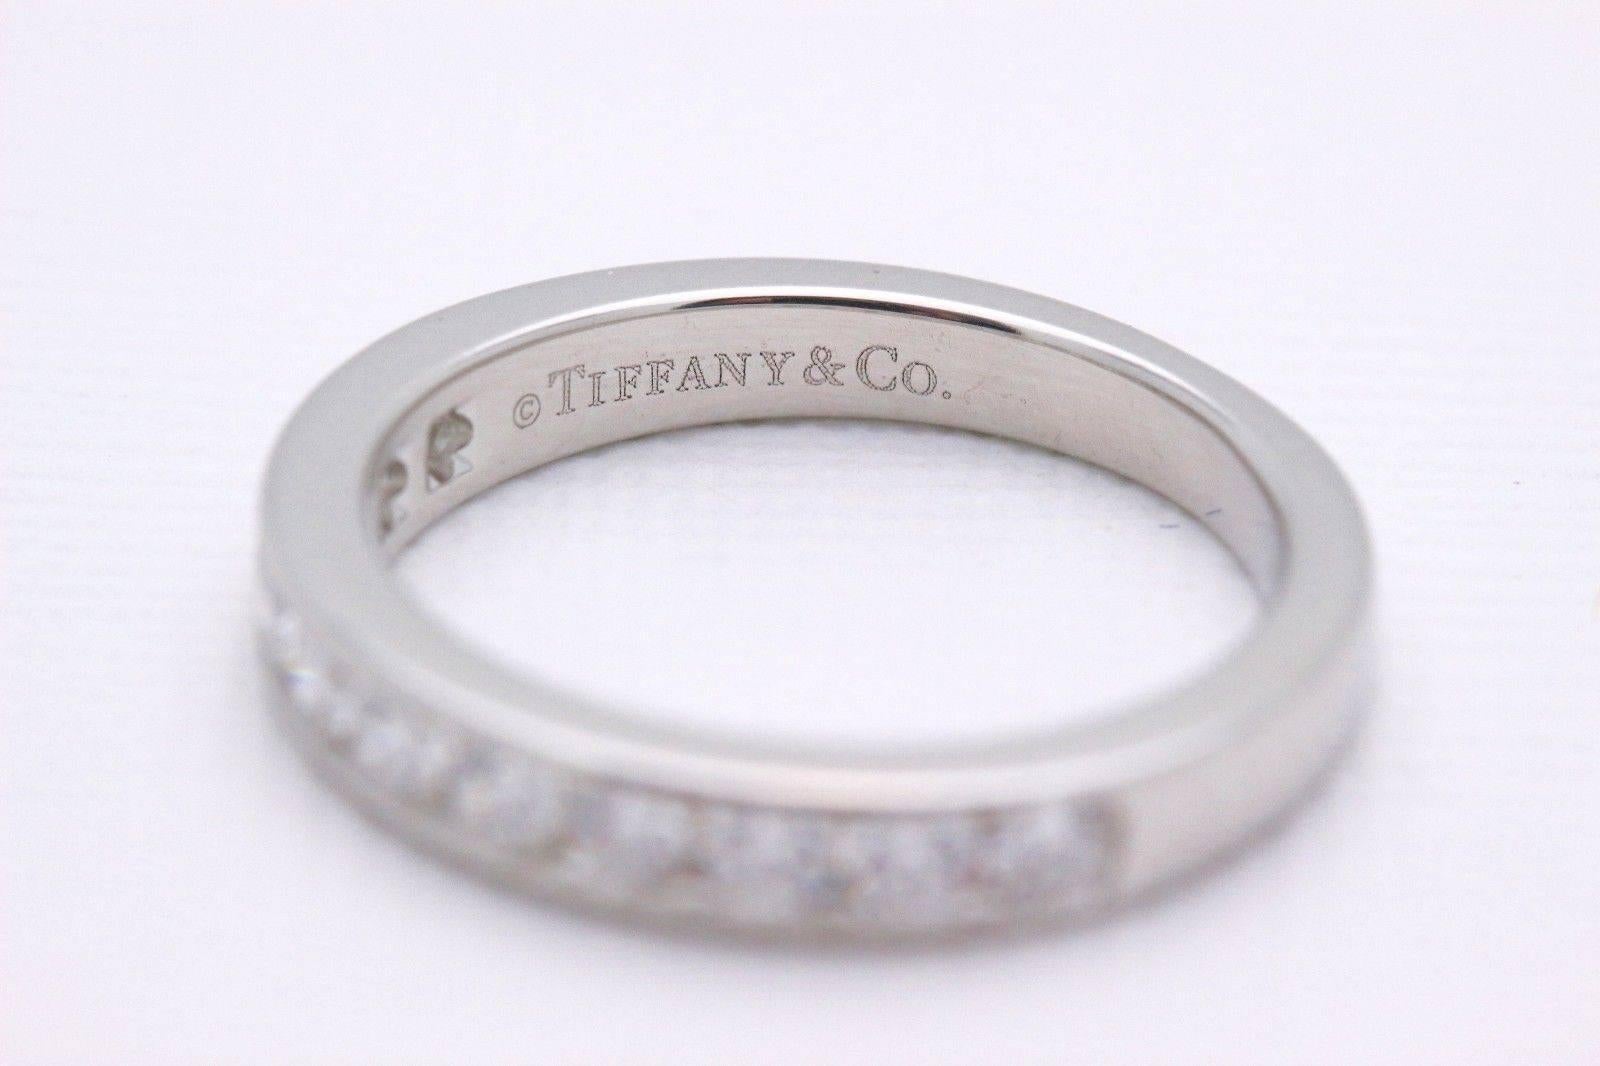 Tiffany & Co.
Style: Half Circle Diamond Wedding Band
Sku Number:  16183334
Metal:  Platinum PT950
Total Carat Weight:  0.24 Cts.
Diamond Shape:  Round Brilliant 
Diamond Color & Clarity:  F / VS
Hallmark:  